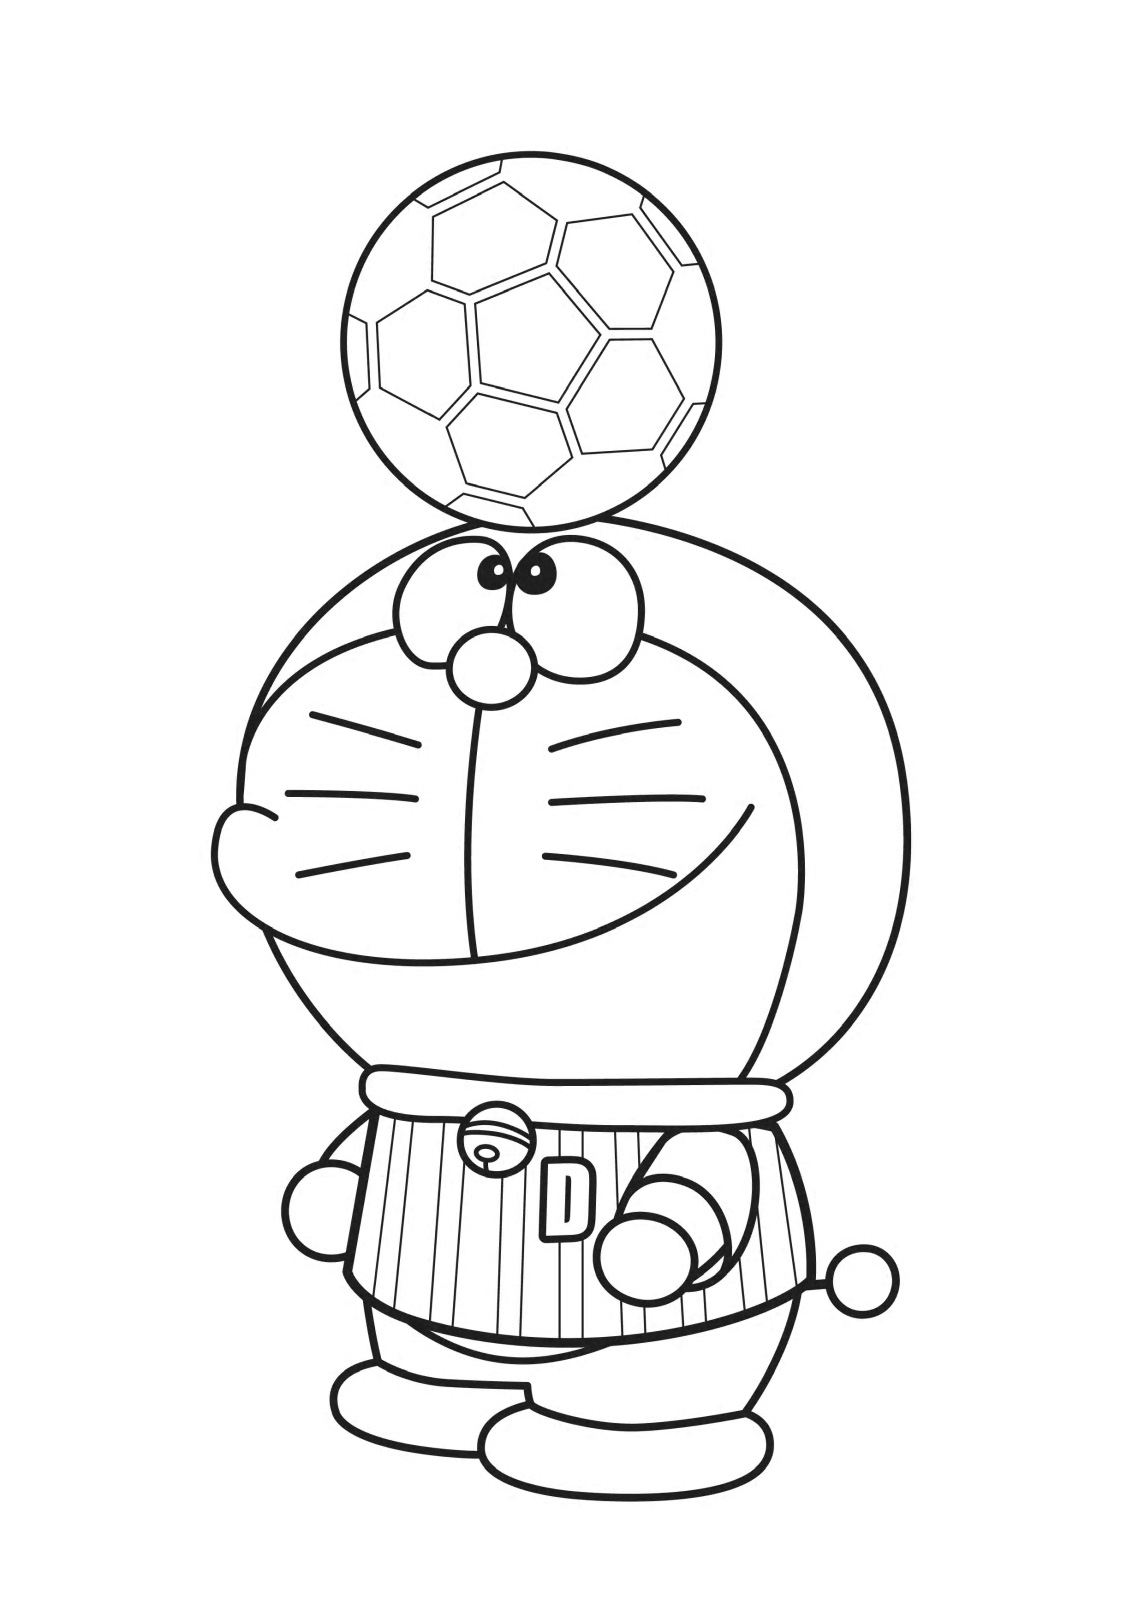 Doraemon Playing Soccer